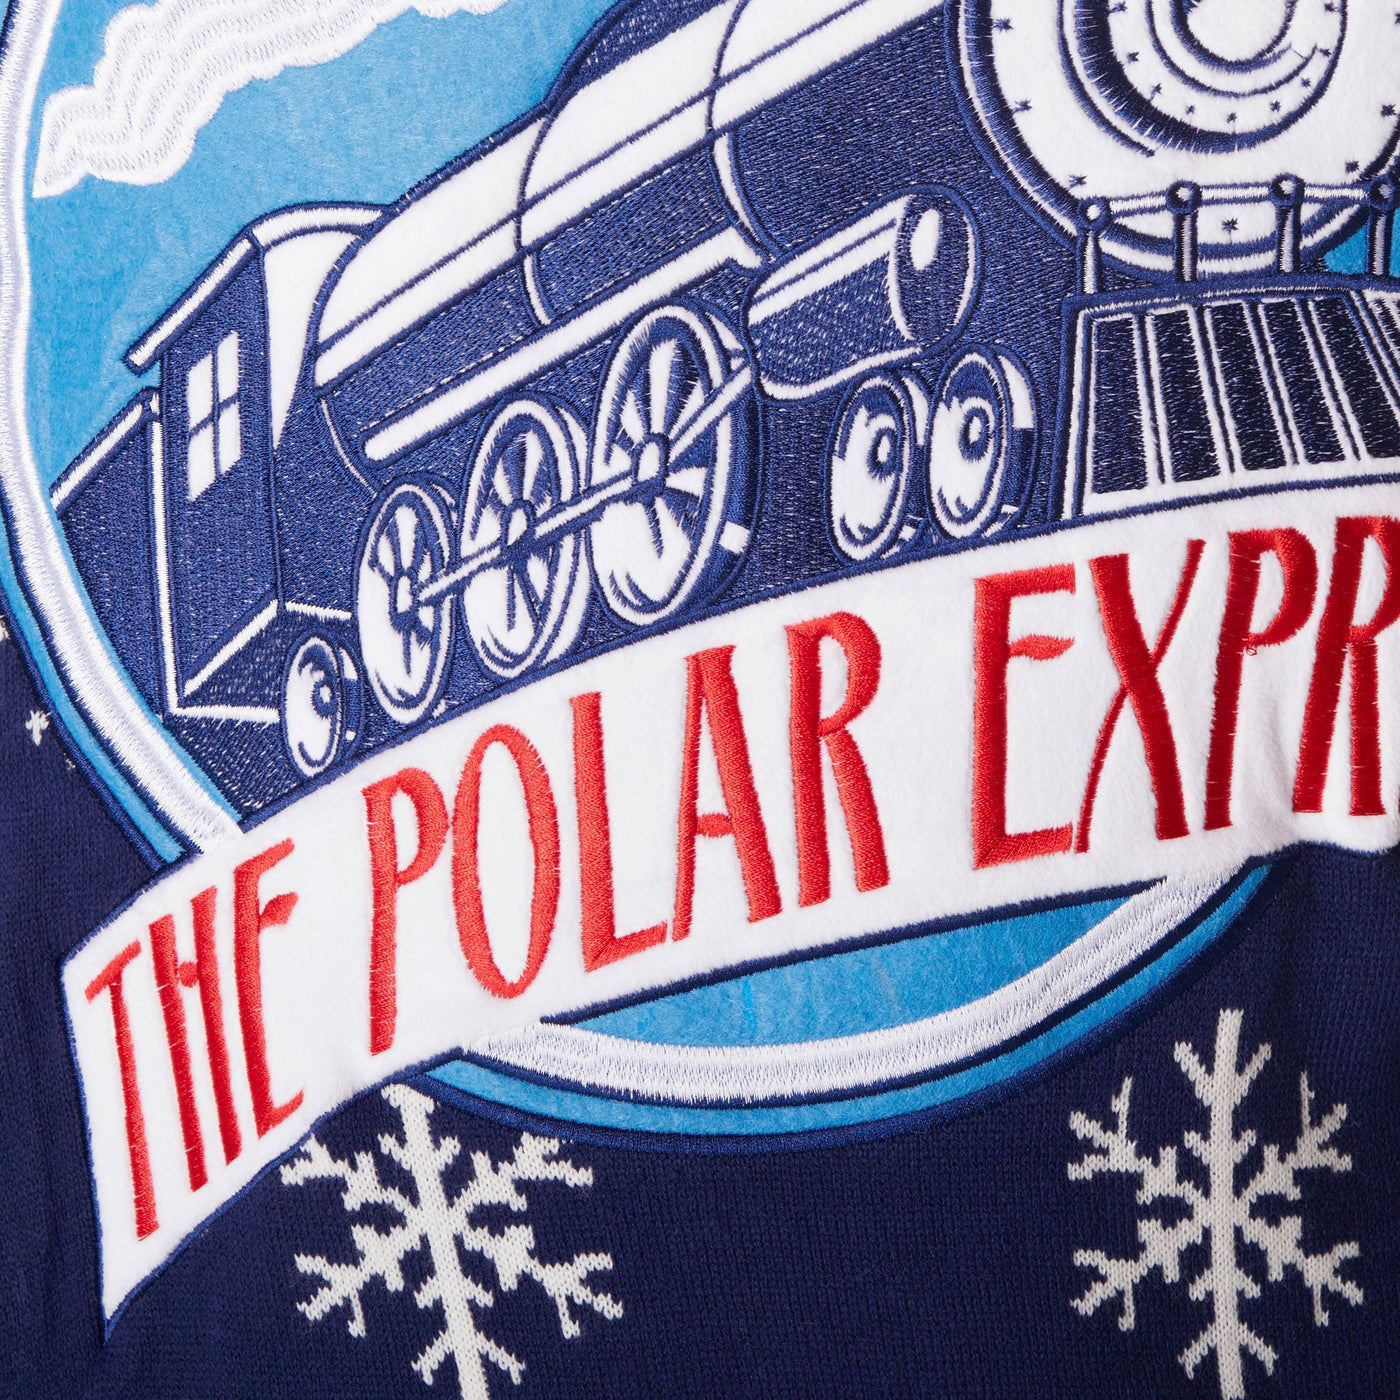 Women's The Polar Express Christmas Sweater